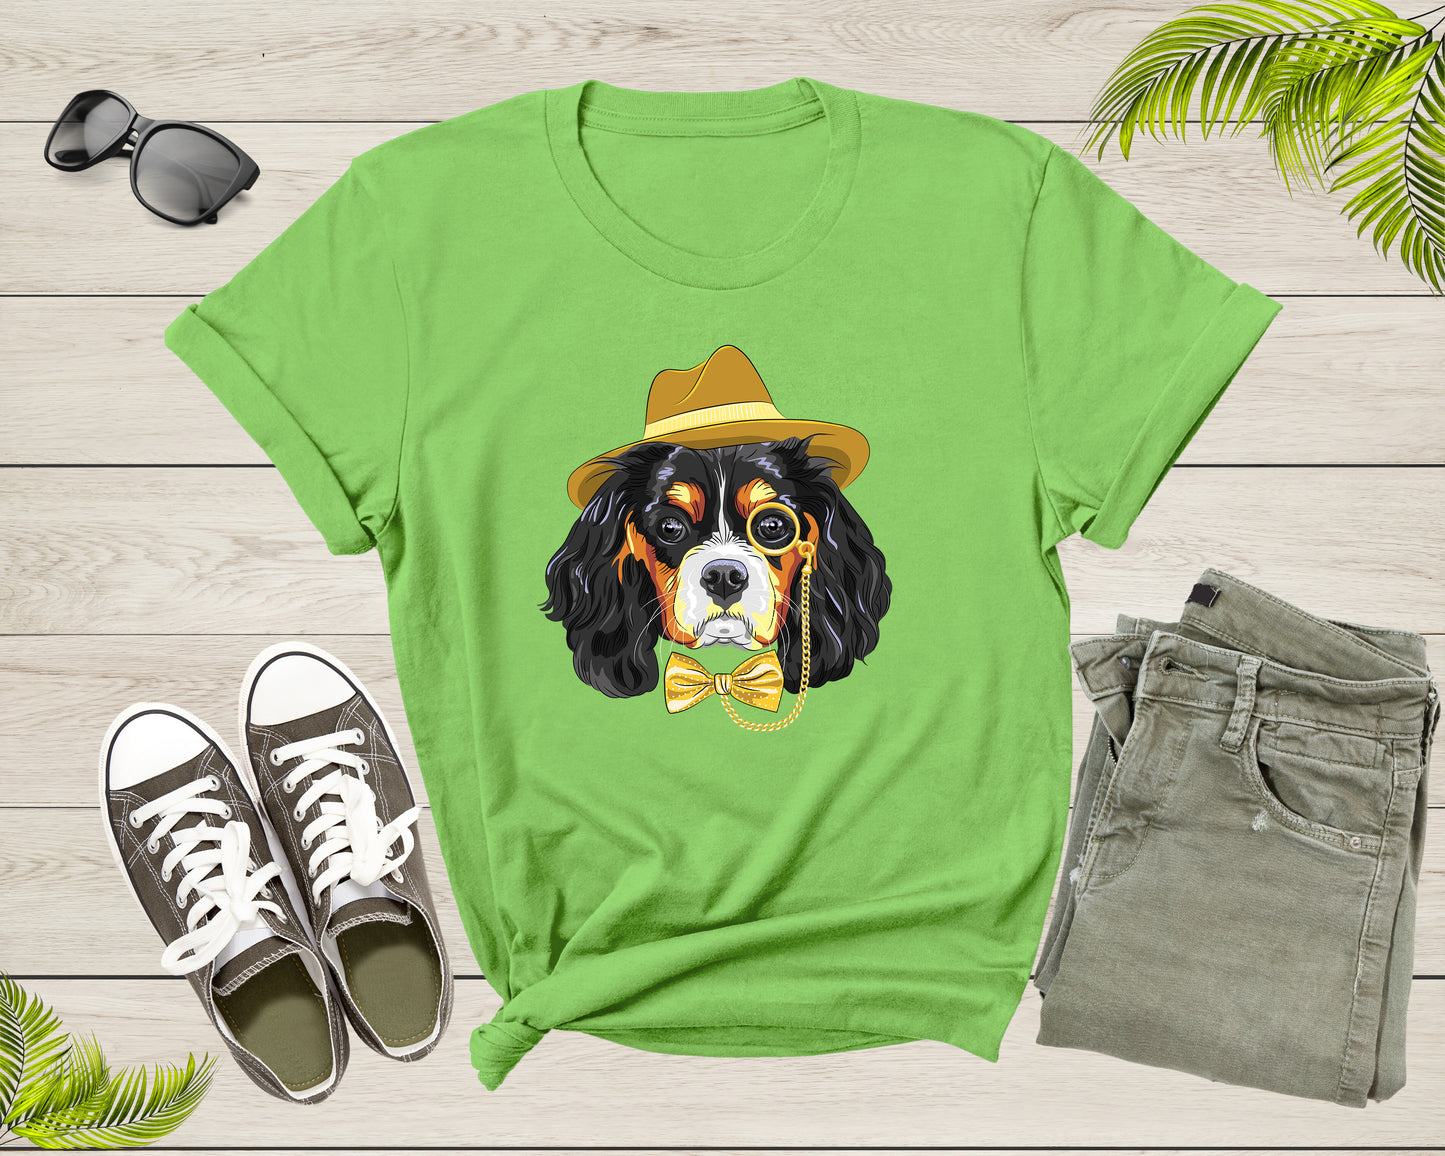 Pet Dog Doggie Puppy Animal Wearing Yellow Ribbon and Hat T-Shirt Dog Puppy Lover Owner Gift T Shirt for Men Women Kids Boys Girls Tshirt